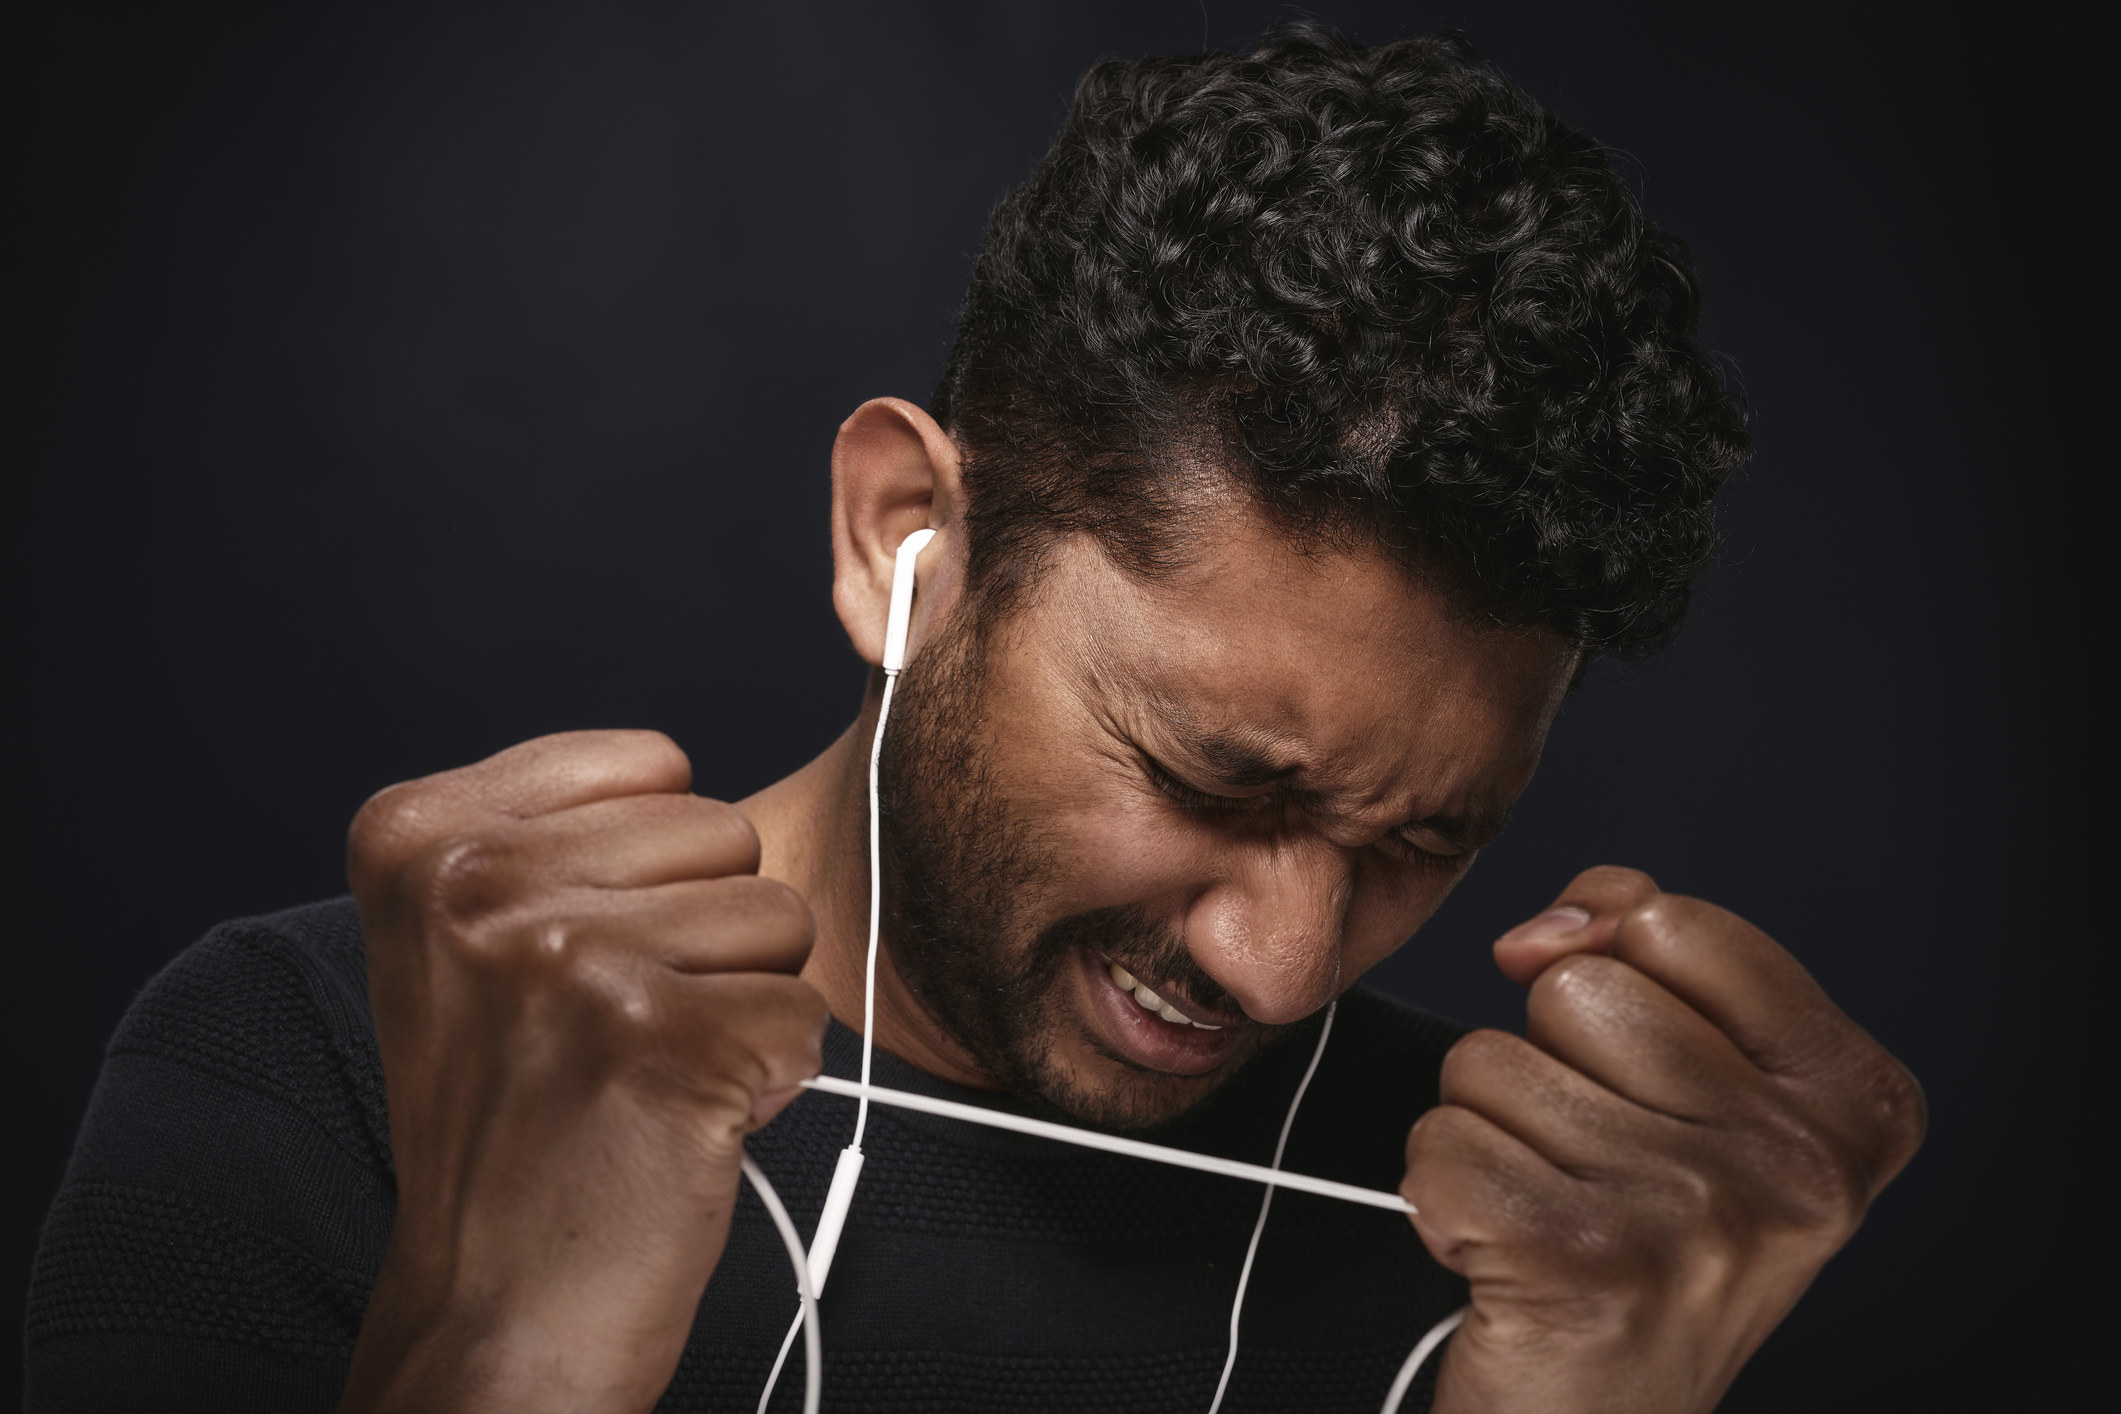 A man tearing at his headphones